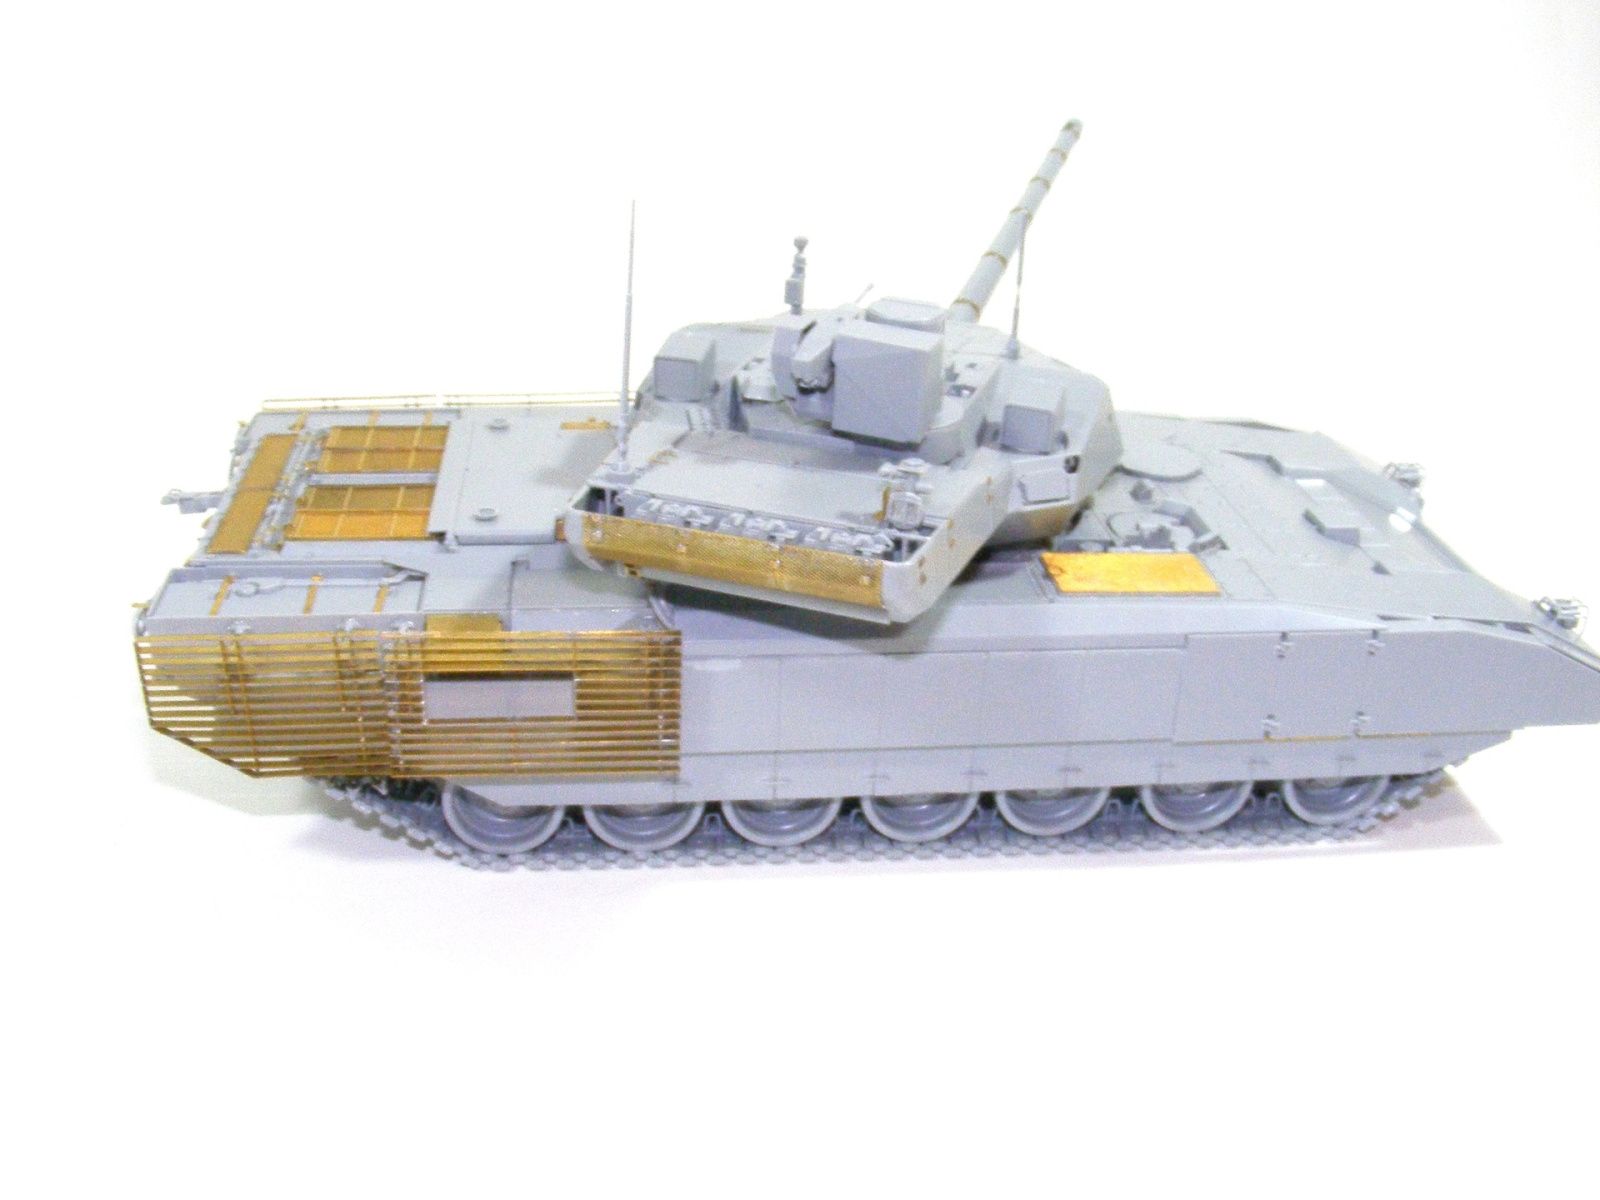 T-14 "Armata" base set - imodeller.store